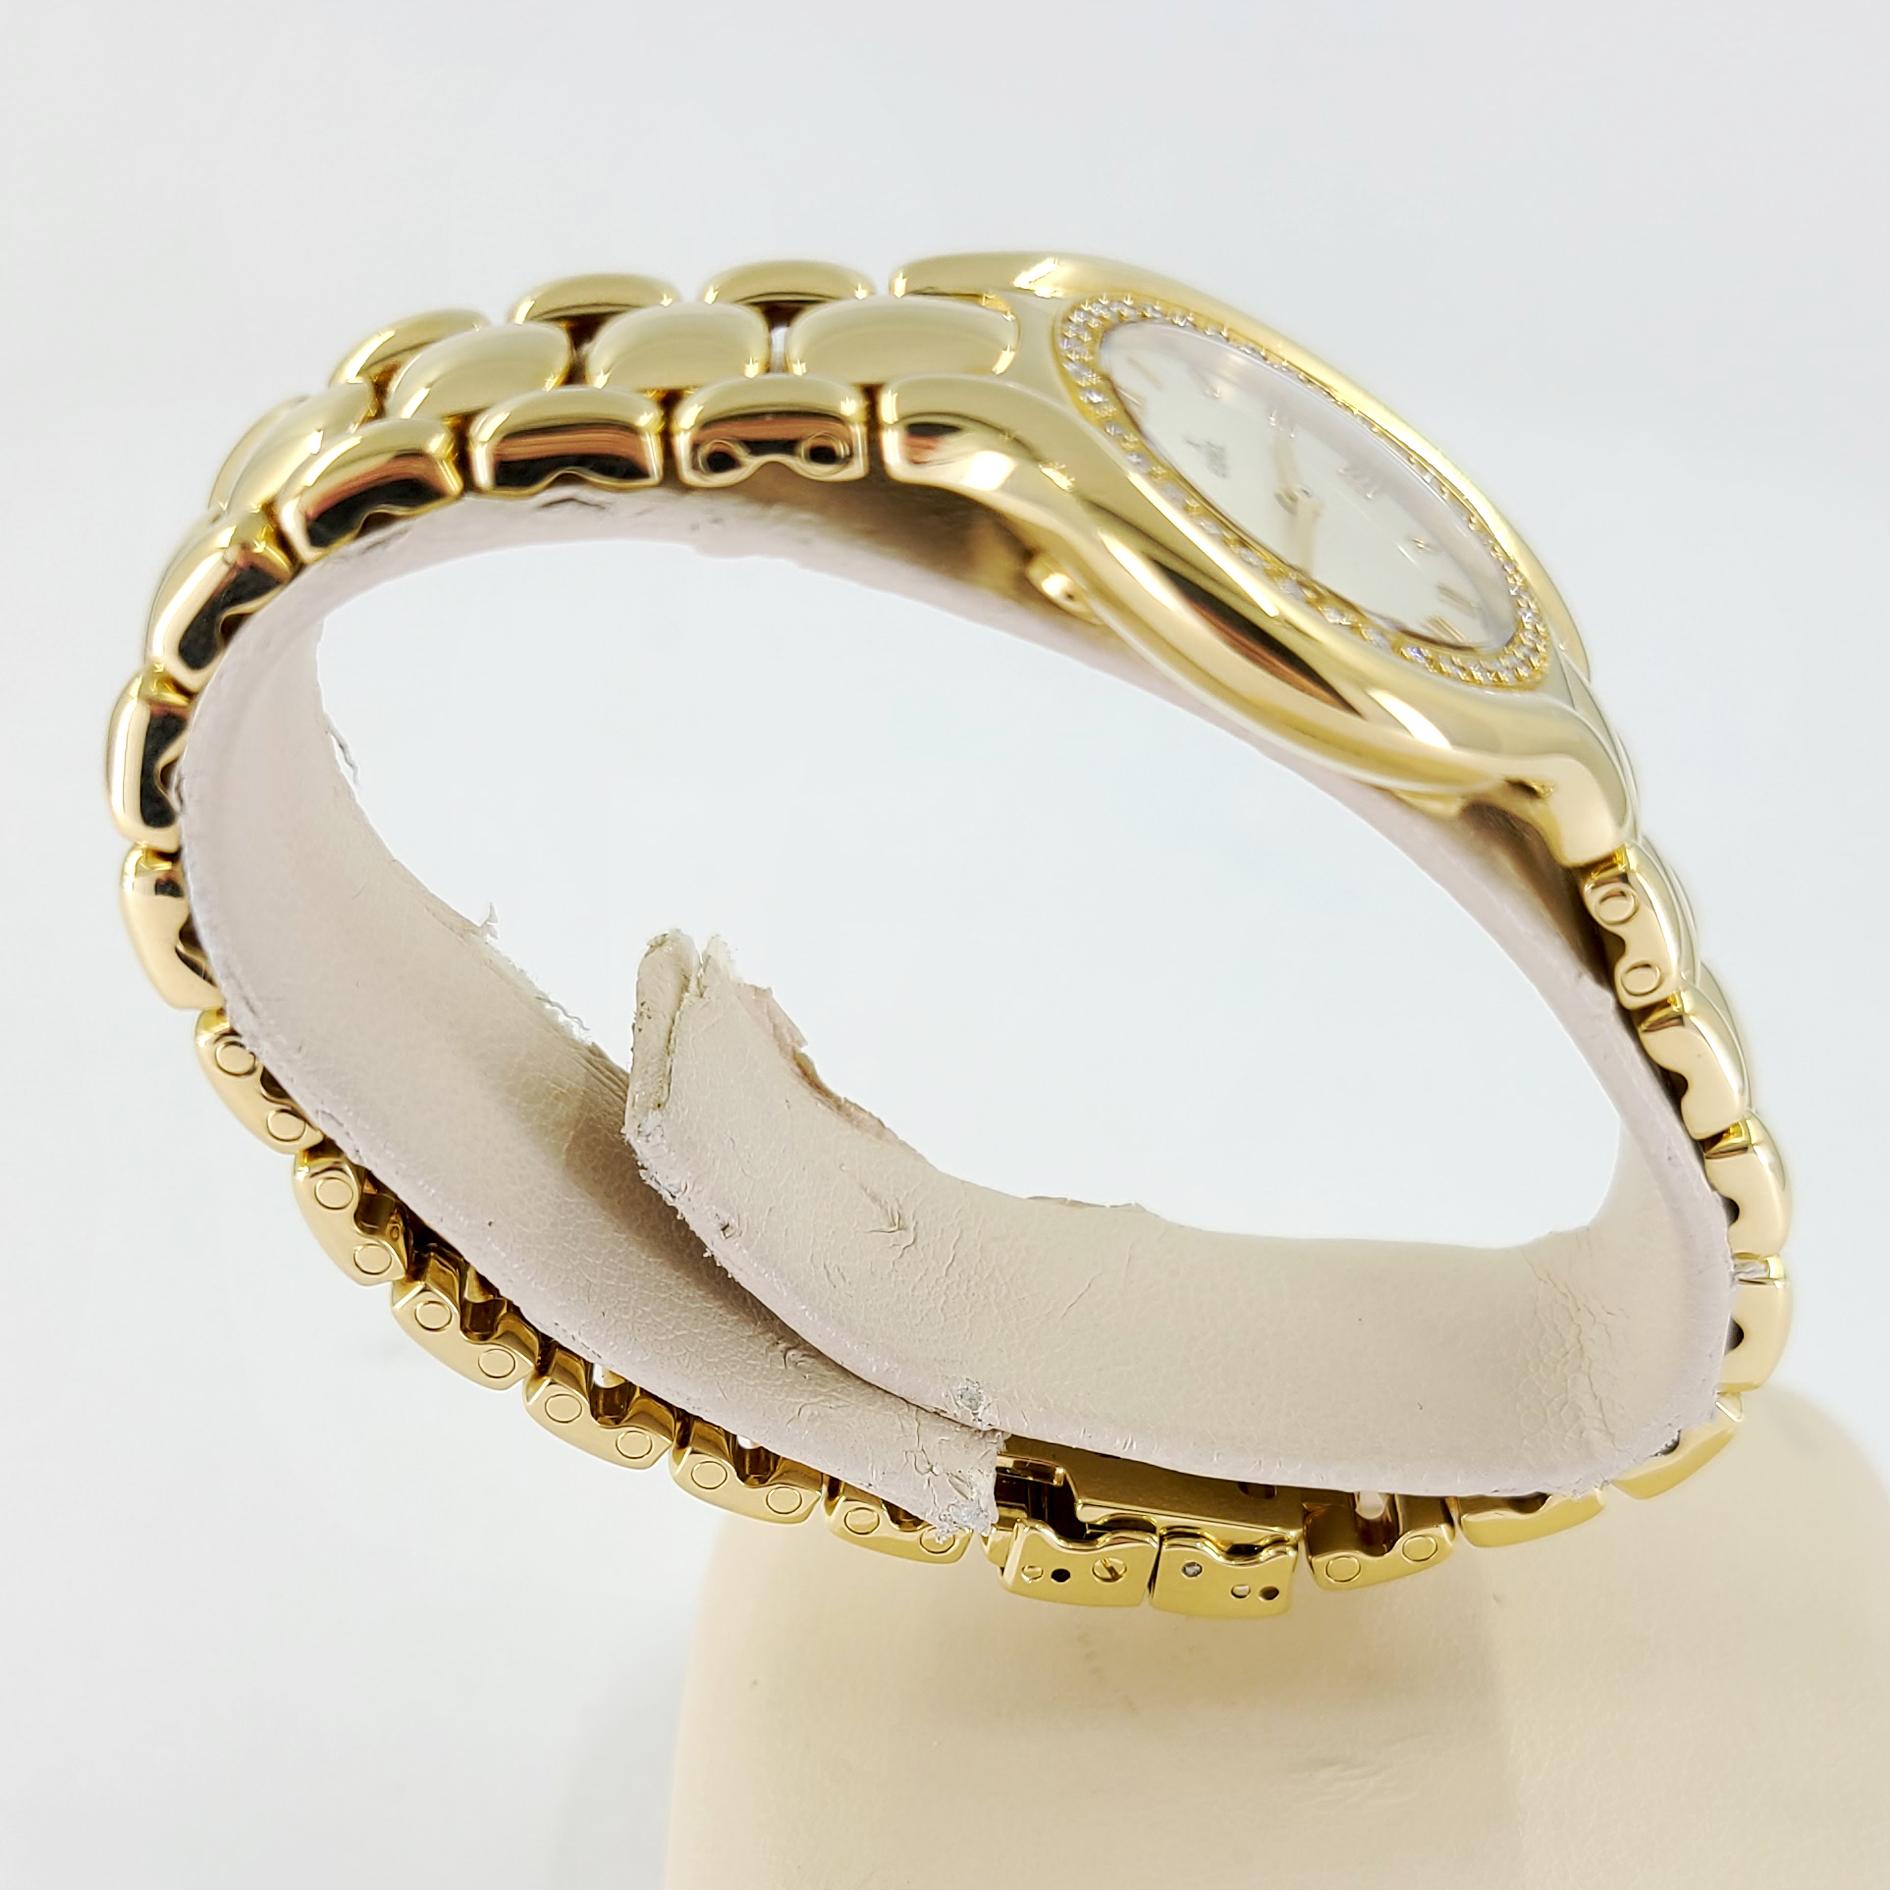 Ebel 18 Karat Yellow Gold Lady's Beluga Wristwatch, Diamonds & Mother of Pearl 2